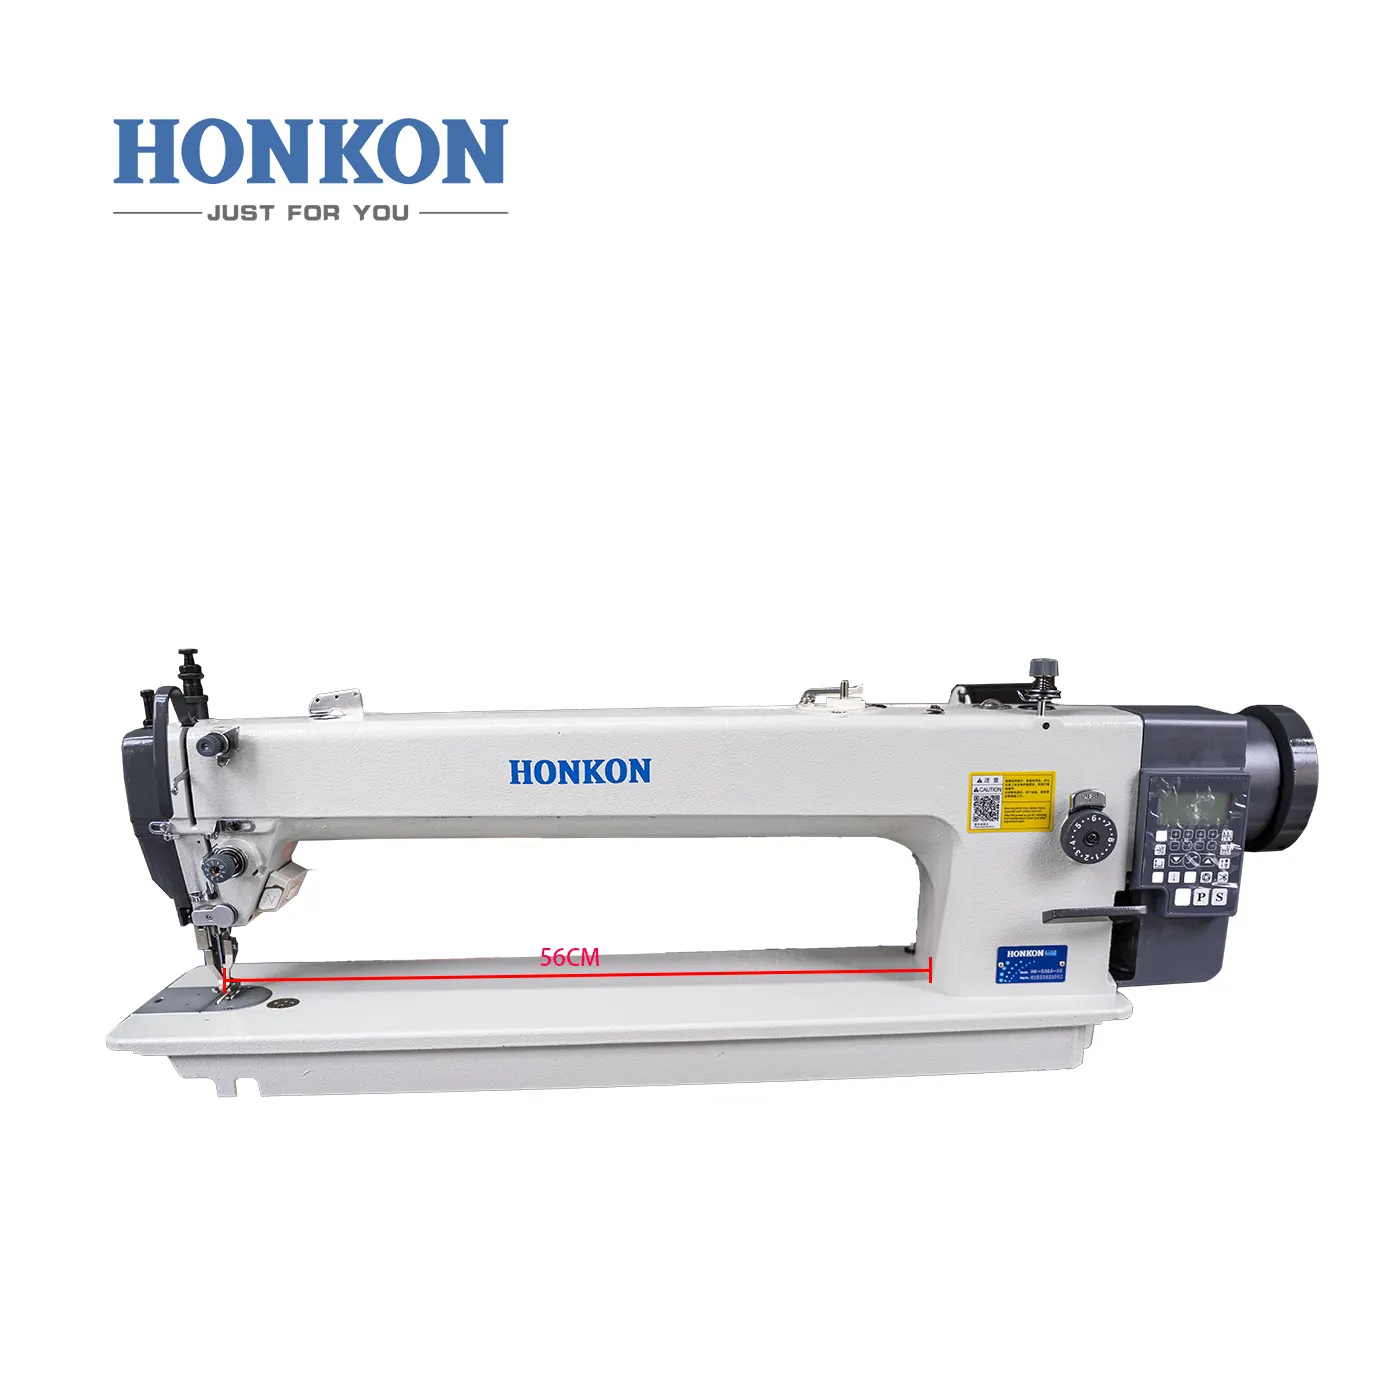 HK-0303D-56 Long arm sewing machine Working range 56cm Heavy duty mixed feed lockstitch machine